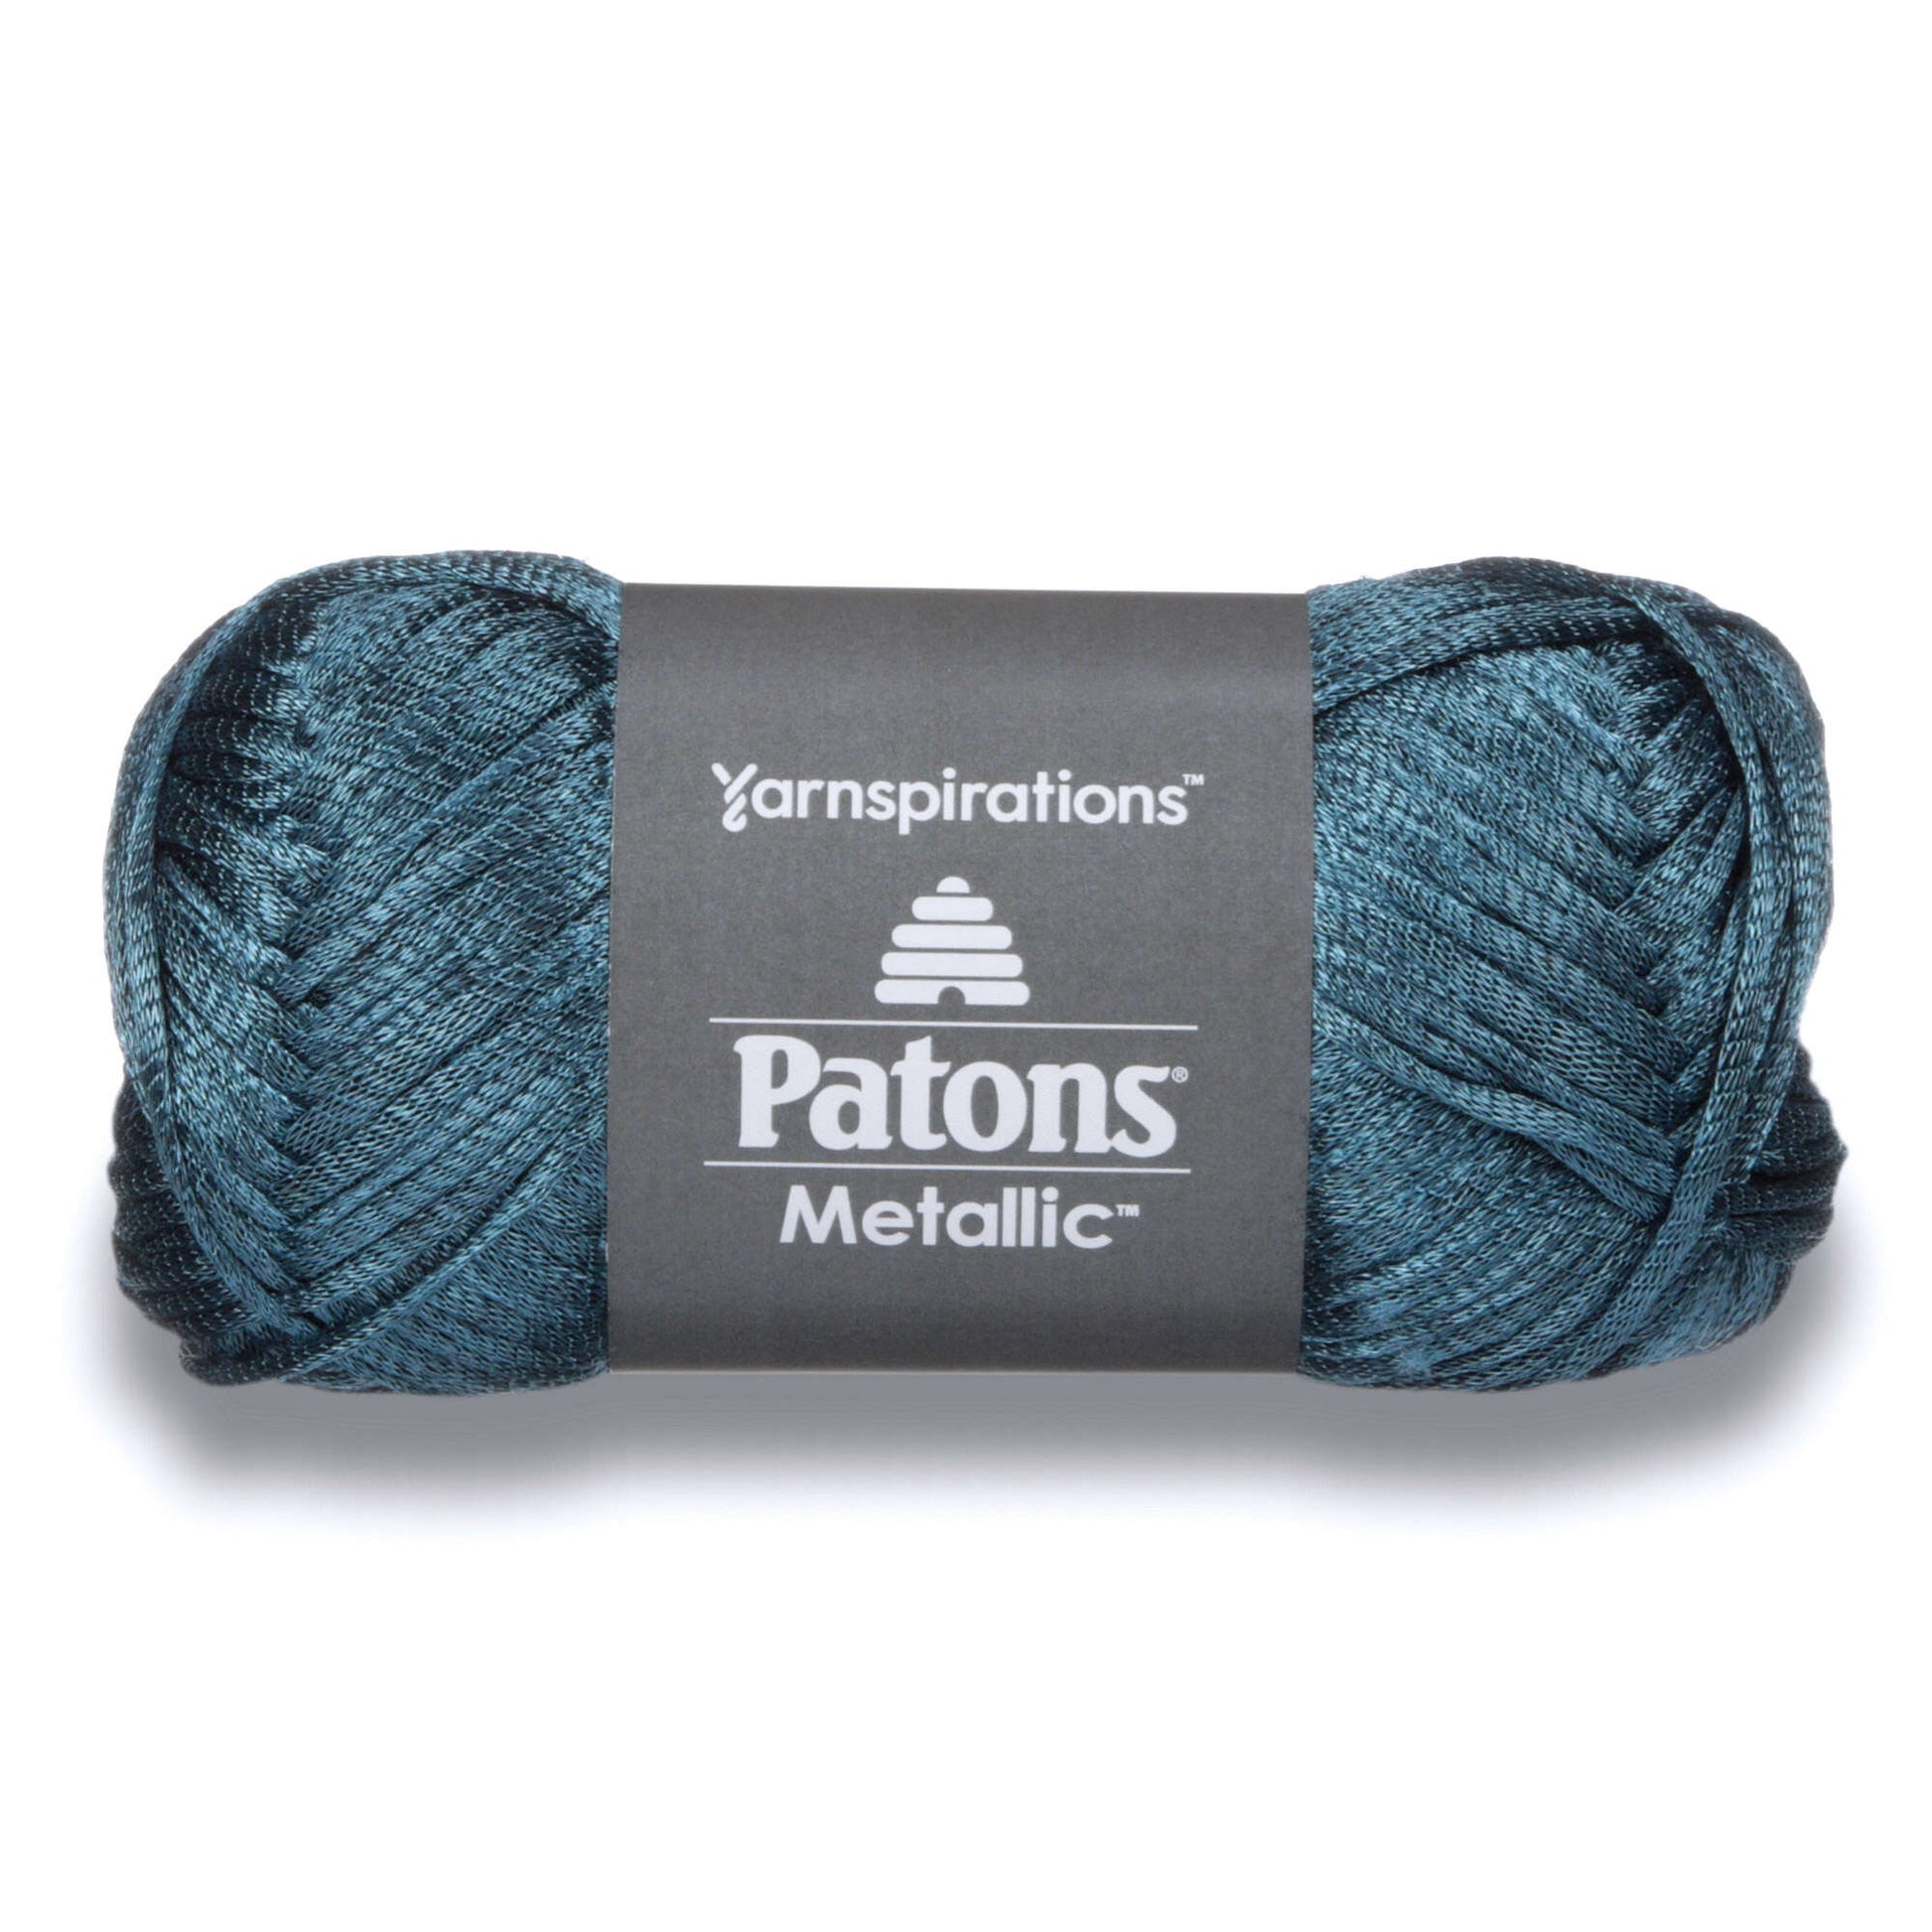 Patons Metallic Yarn - Discontinued